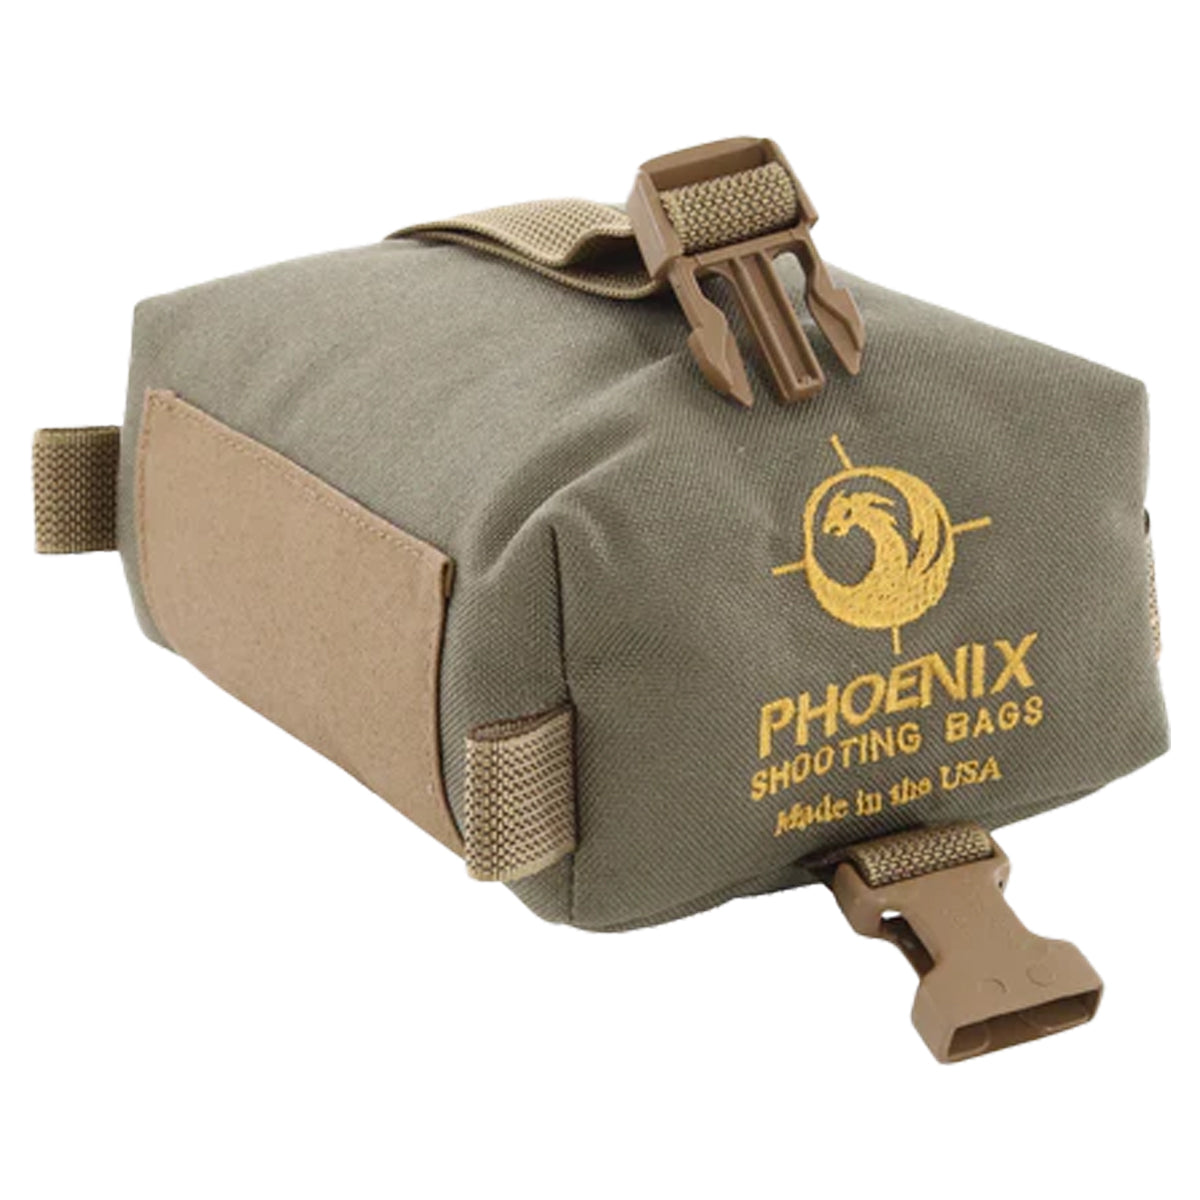 Phoenix Shooting Bags X-Small Rear Bag in Ranger Green by GOHUNT | Phoenix Shooting Bags - GOHUNT Shop